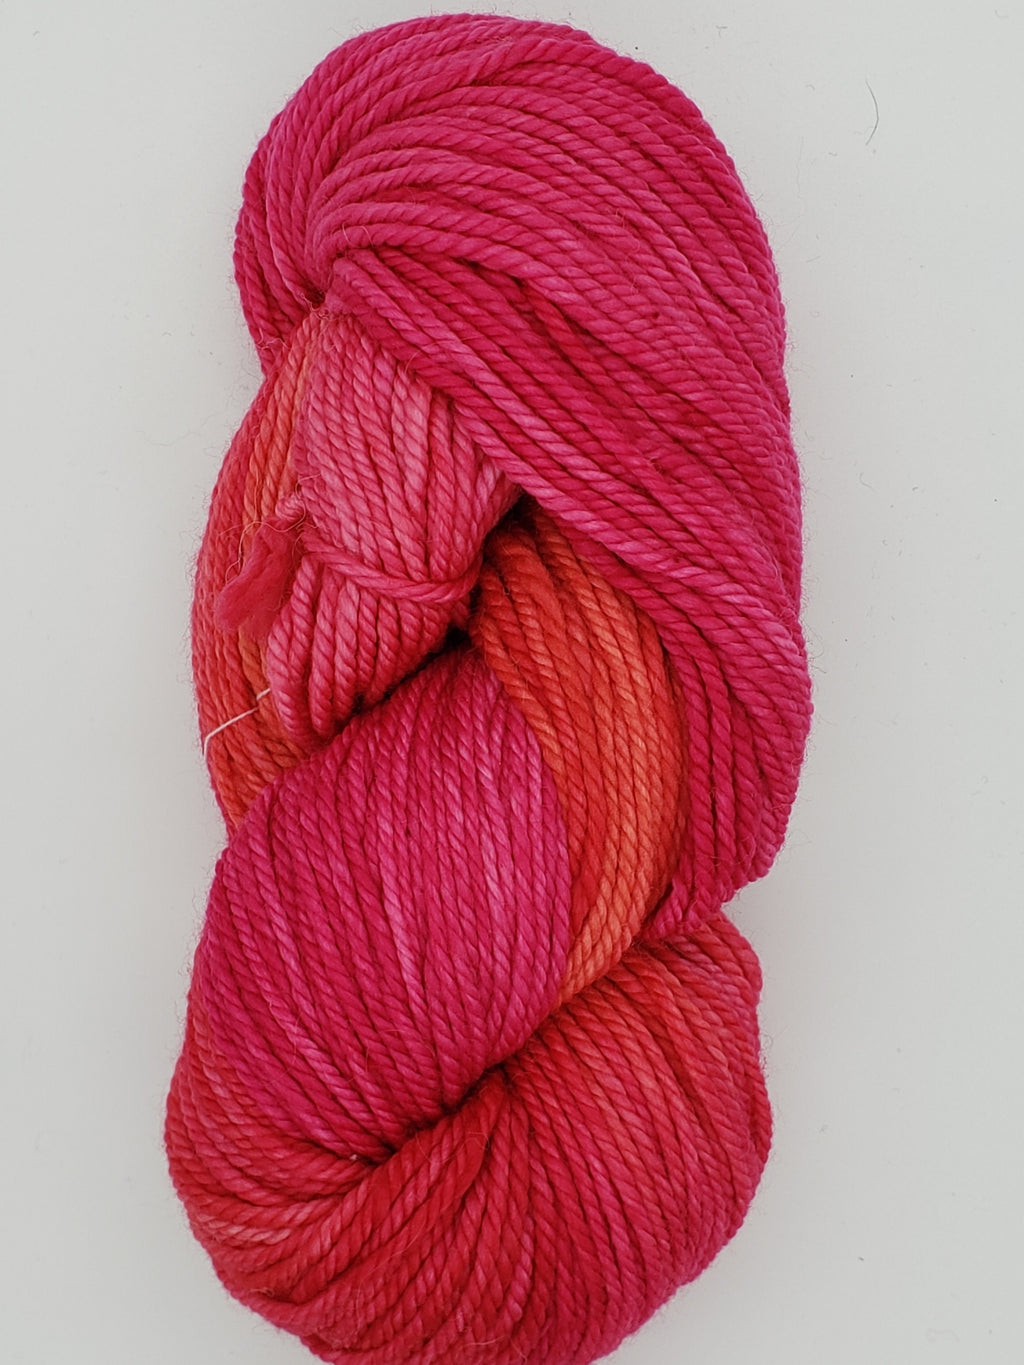 Back Country - ITALIAN ROSE - Hand Dyed Chunky Yarn 4 ounces/125g